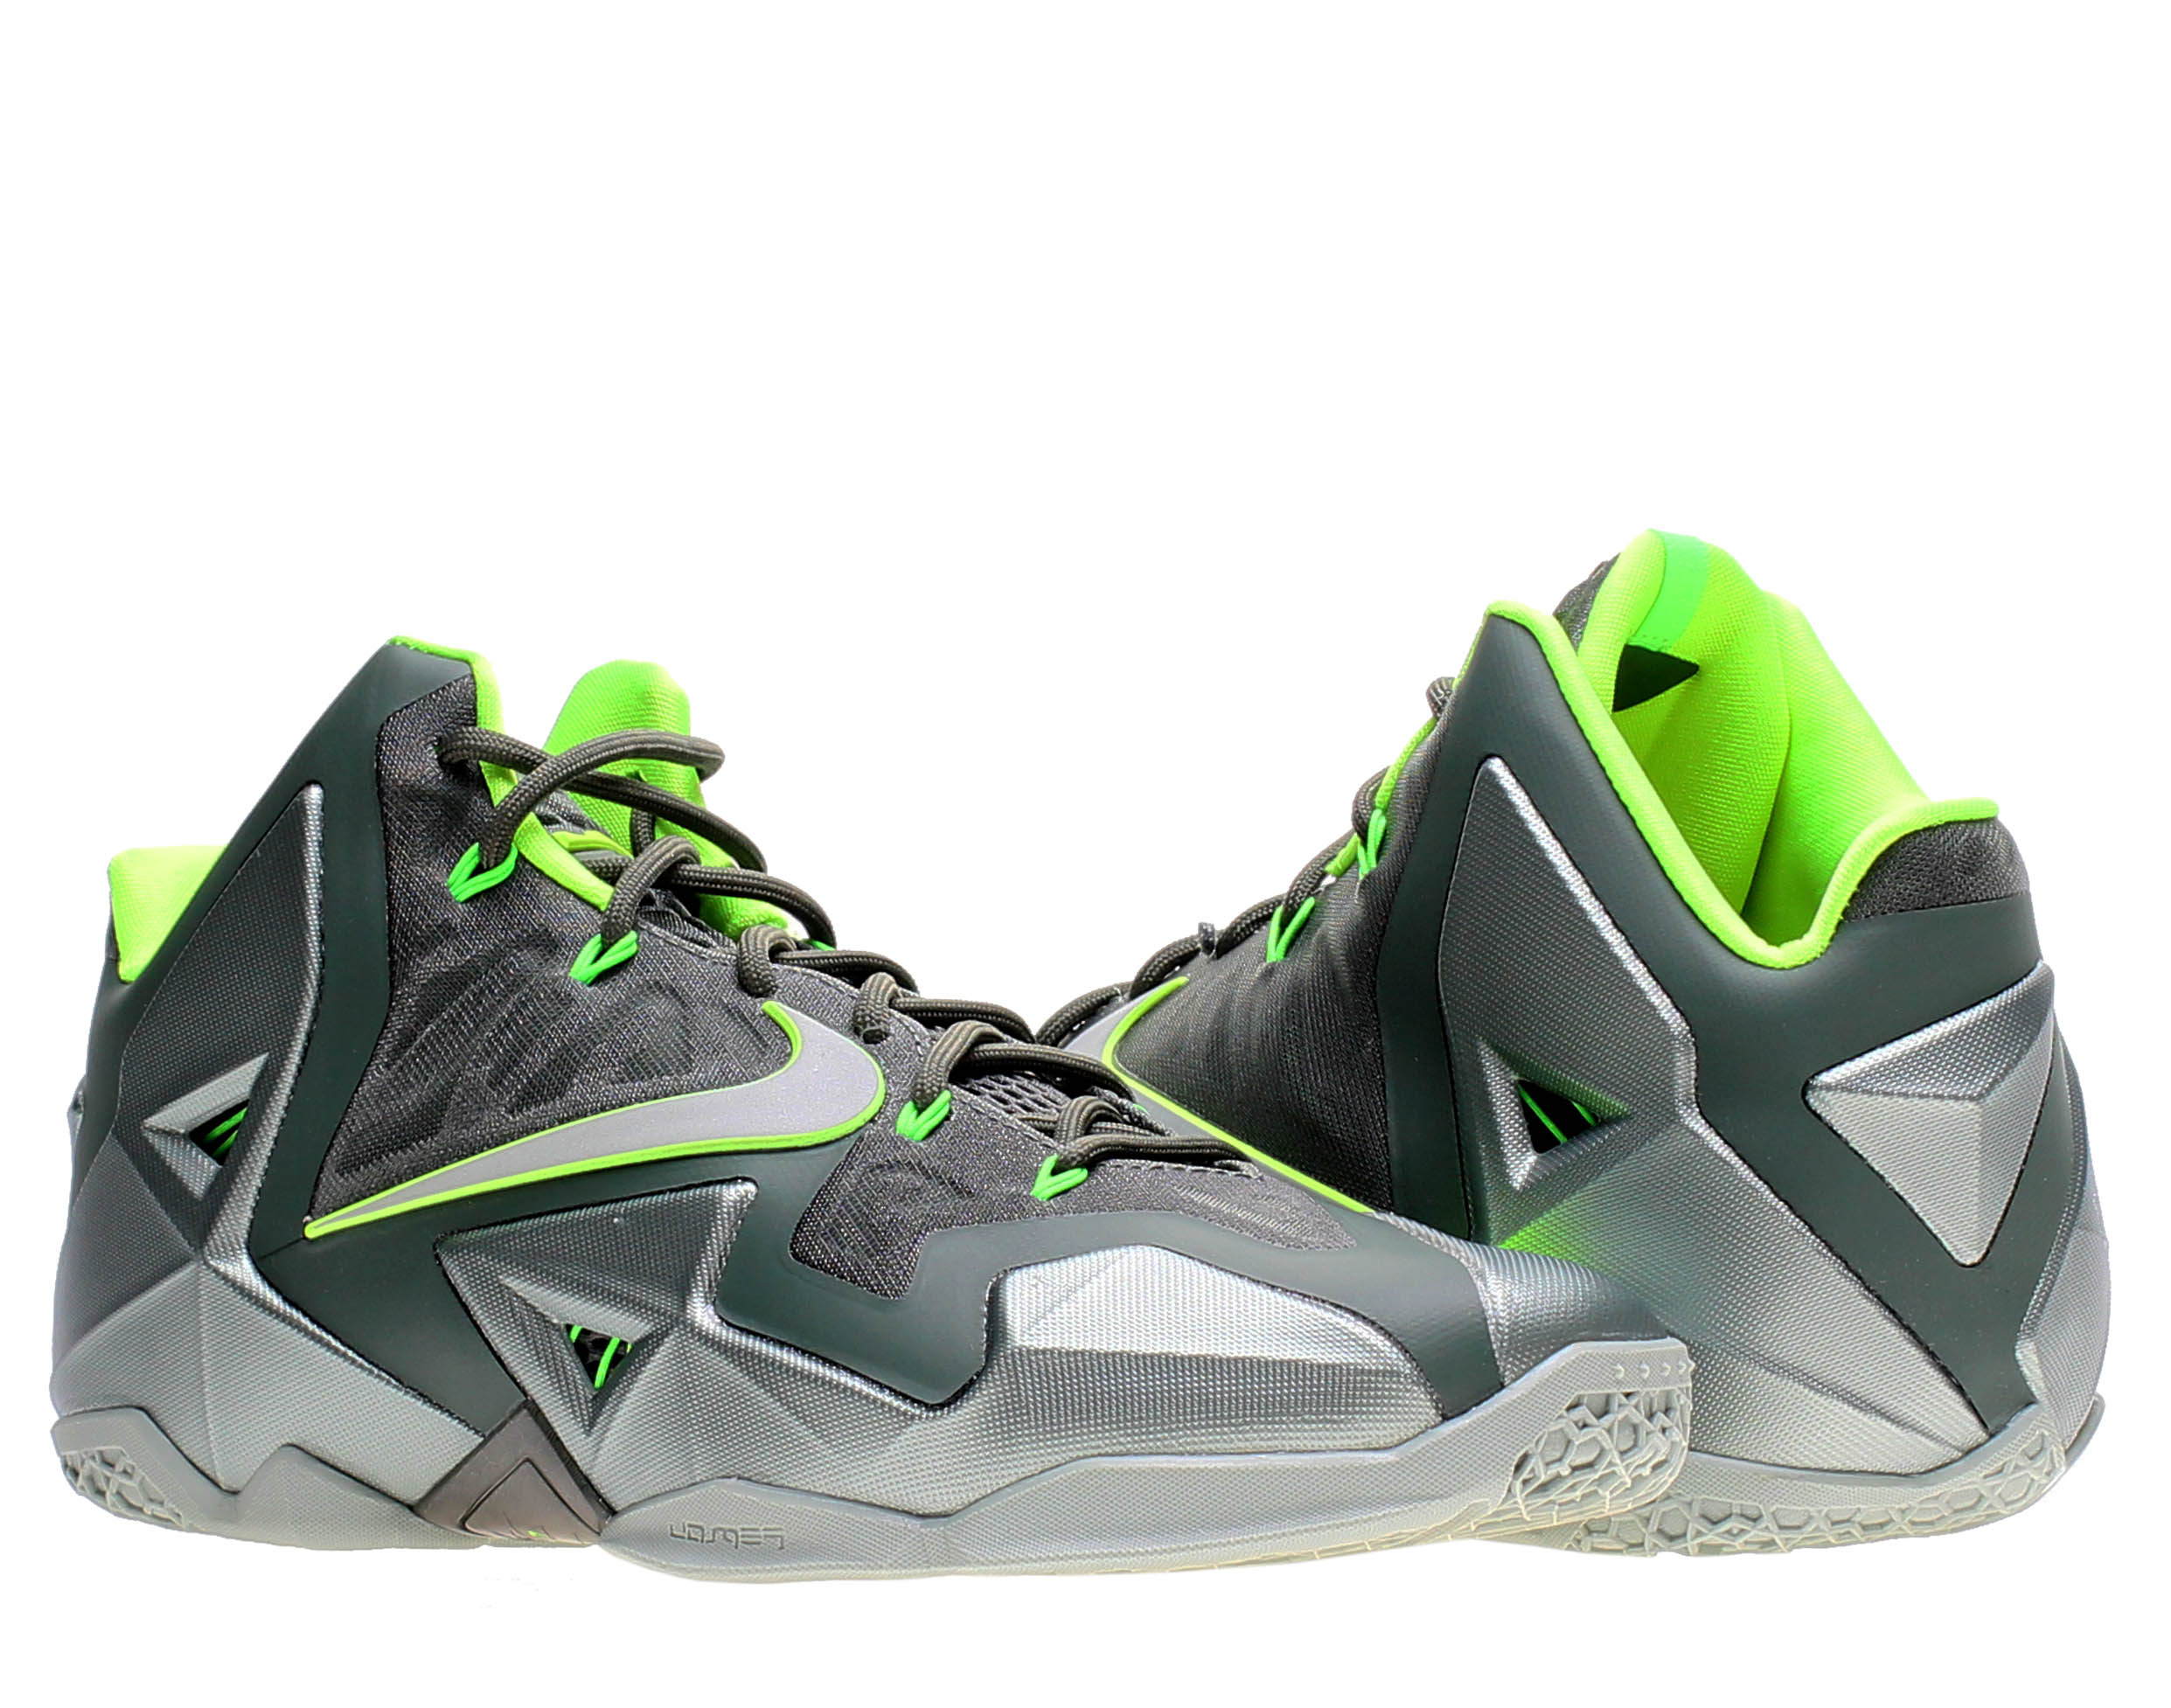 Nike Lebron XI Men's Basketball Shoes MC Green/Spray-Dark MC Green/Volt 616175-300 (12 D(M) US) - image 1 of 6